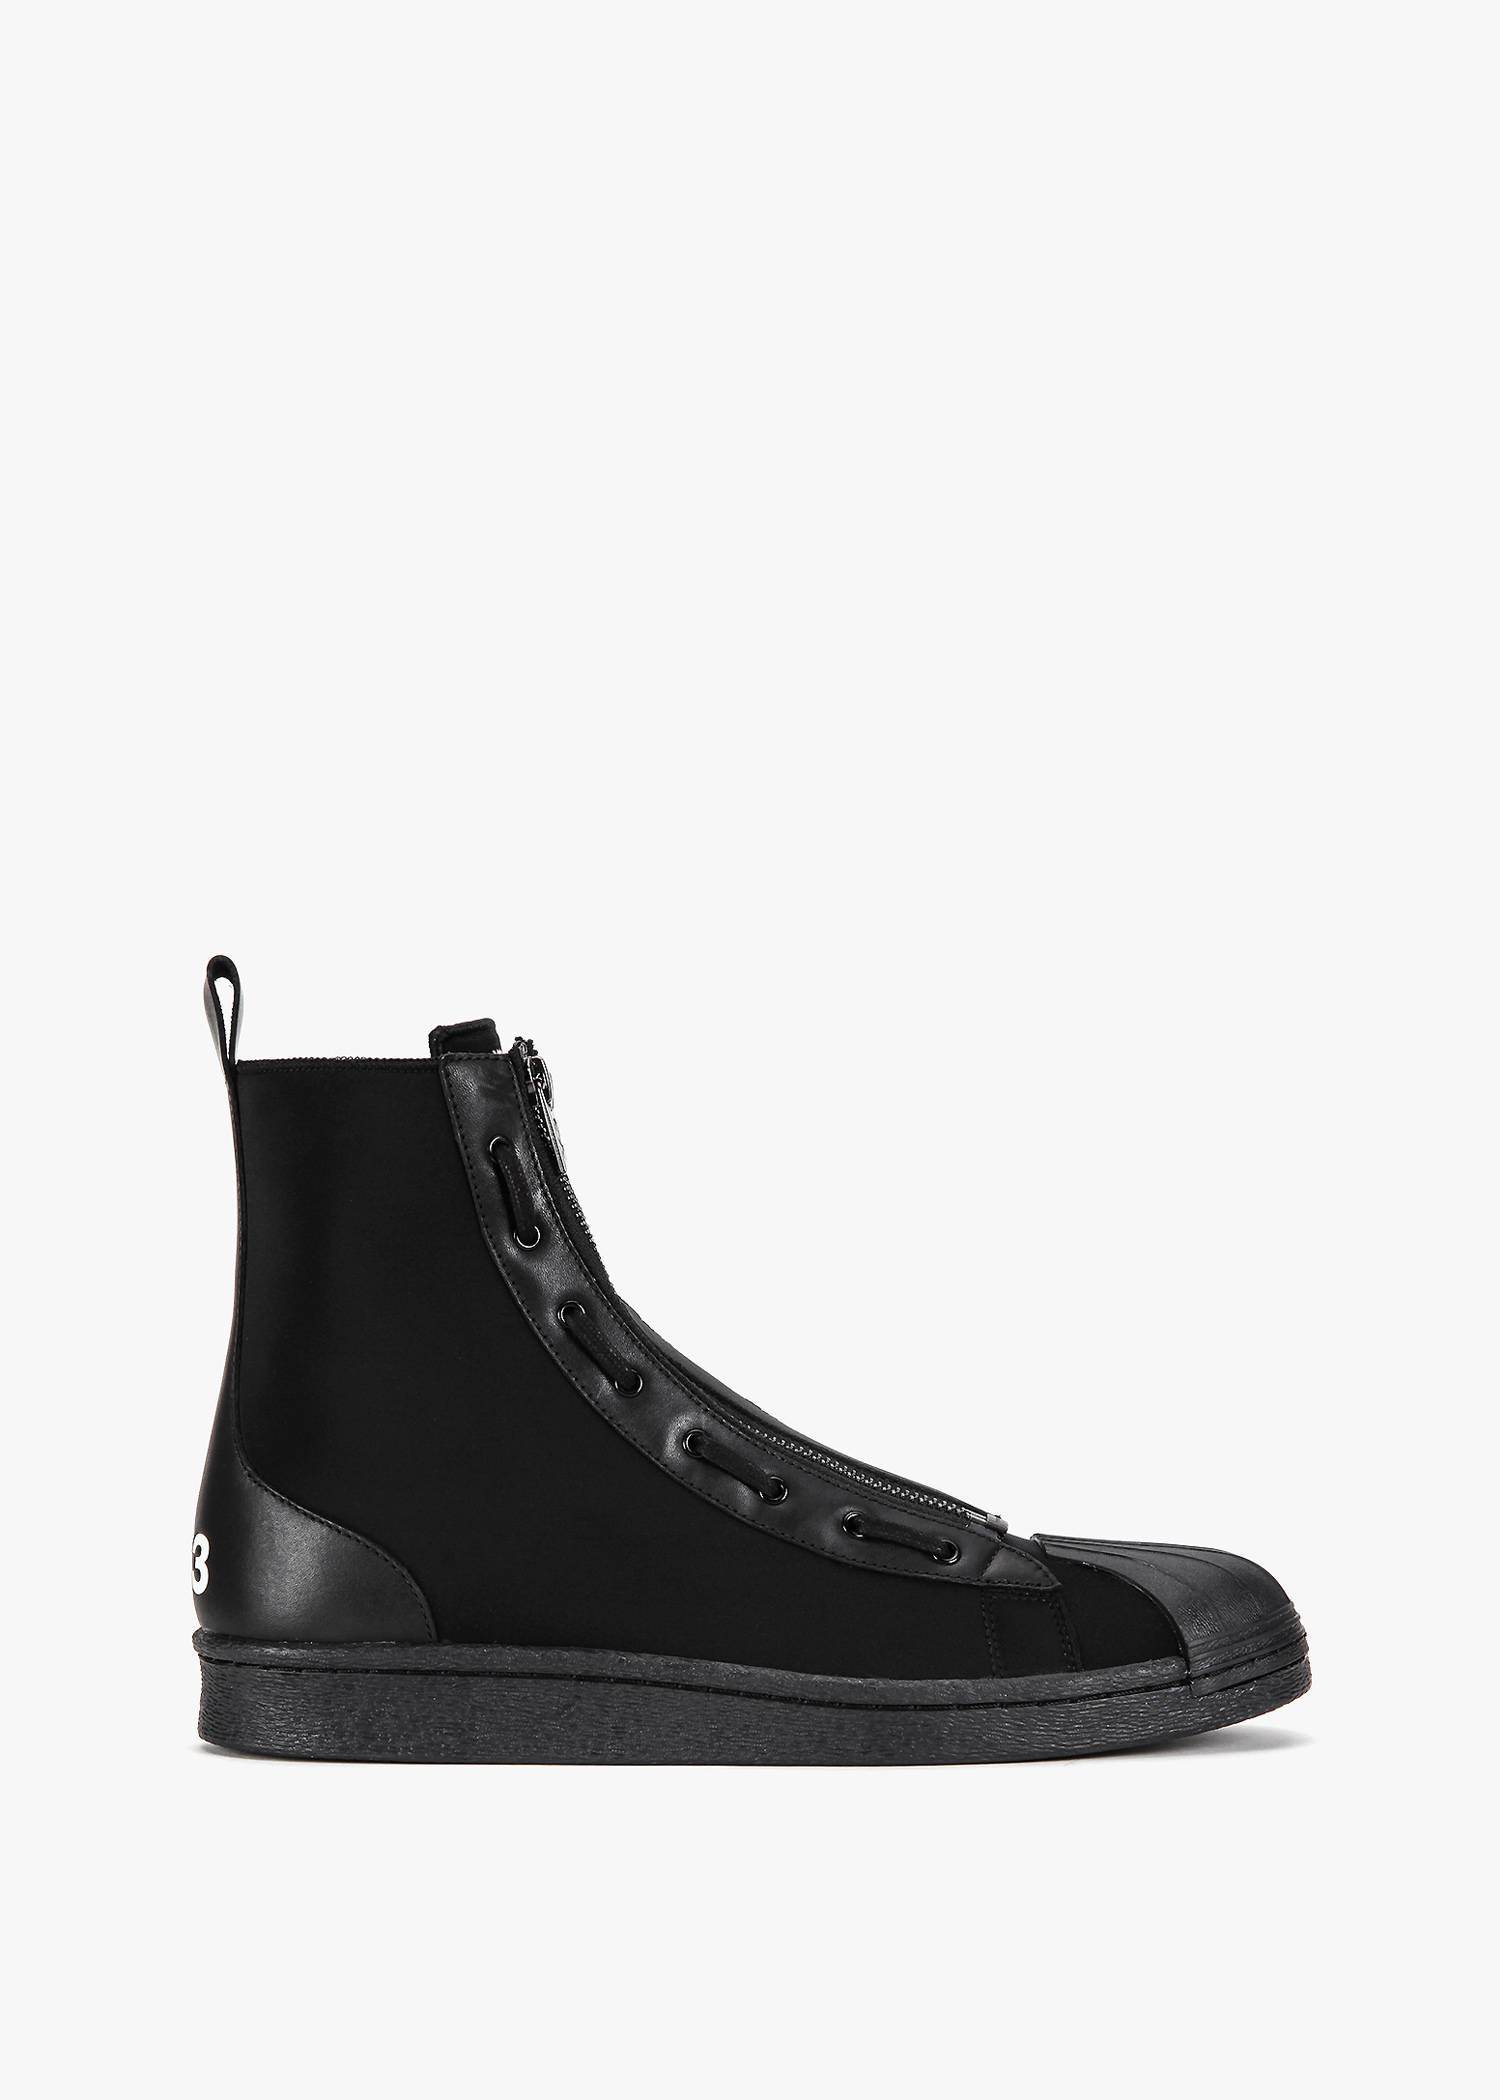 Y-3 Pro Zip High Top Sneaker In Core Black/core Black/core Black | ModeSens